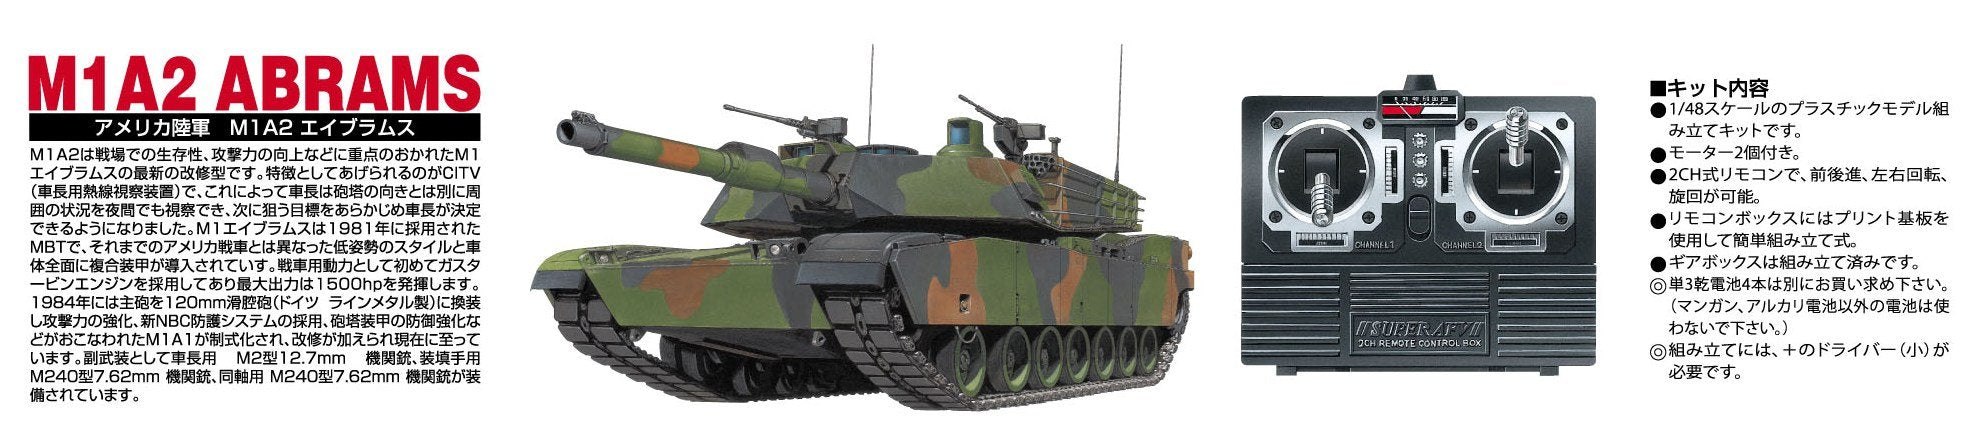 AOSHIMA 00809 Rc Afv Series No. 5 Us Army M1A2 Abrams Kit à l'échelle 1/48